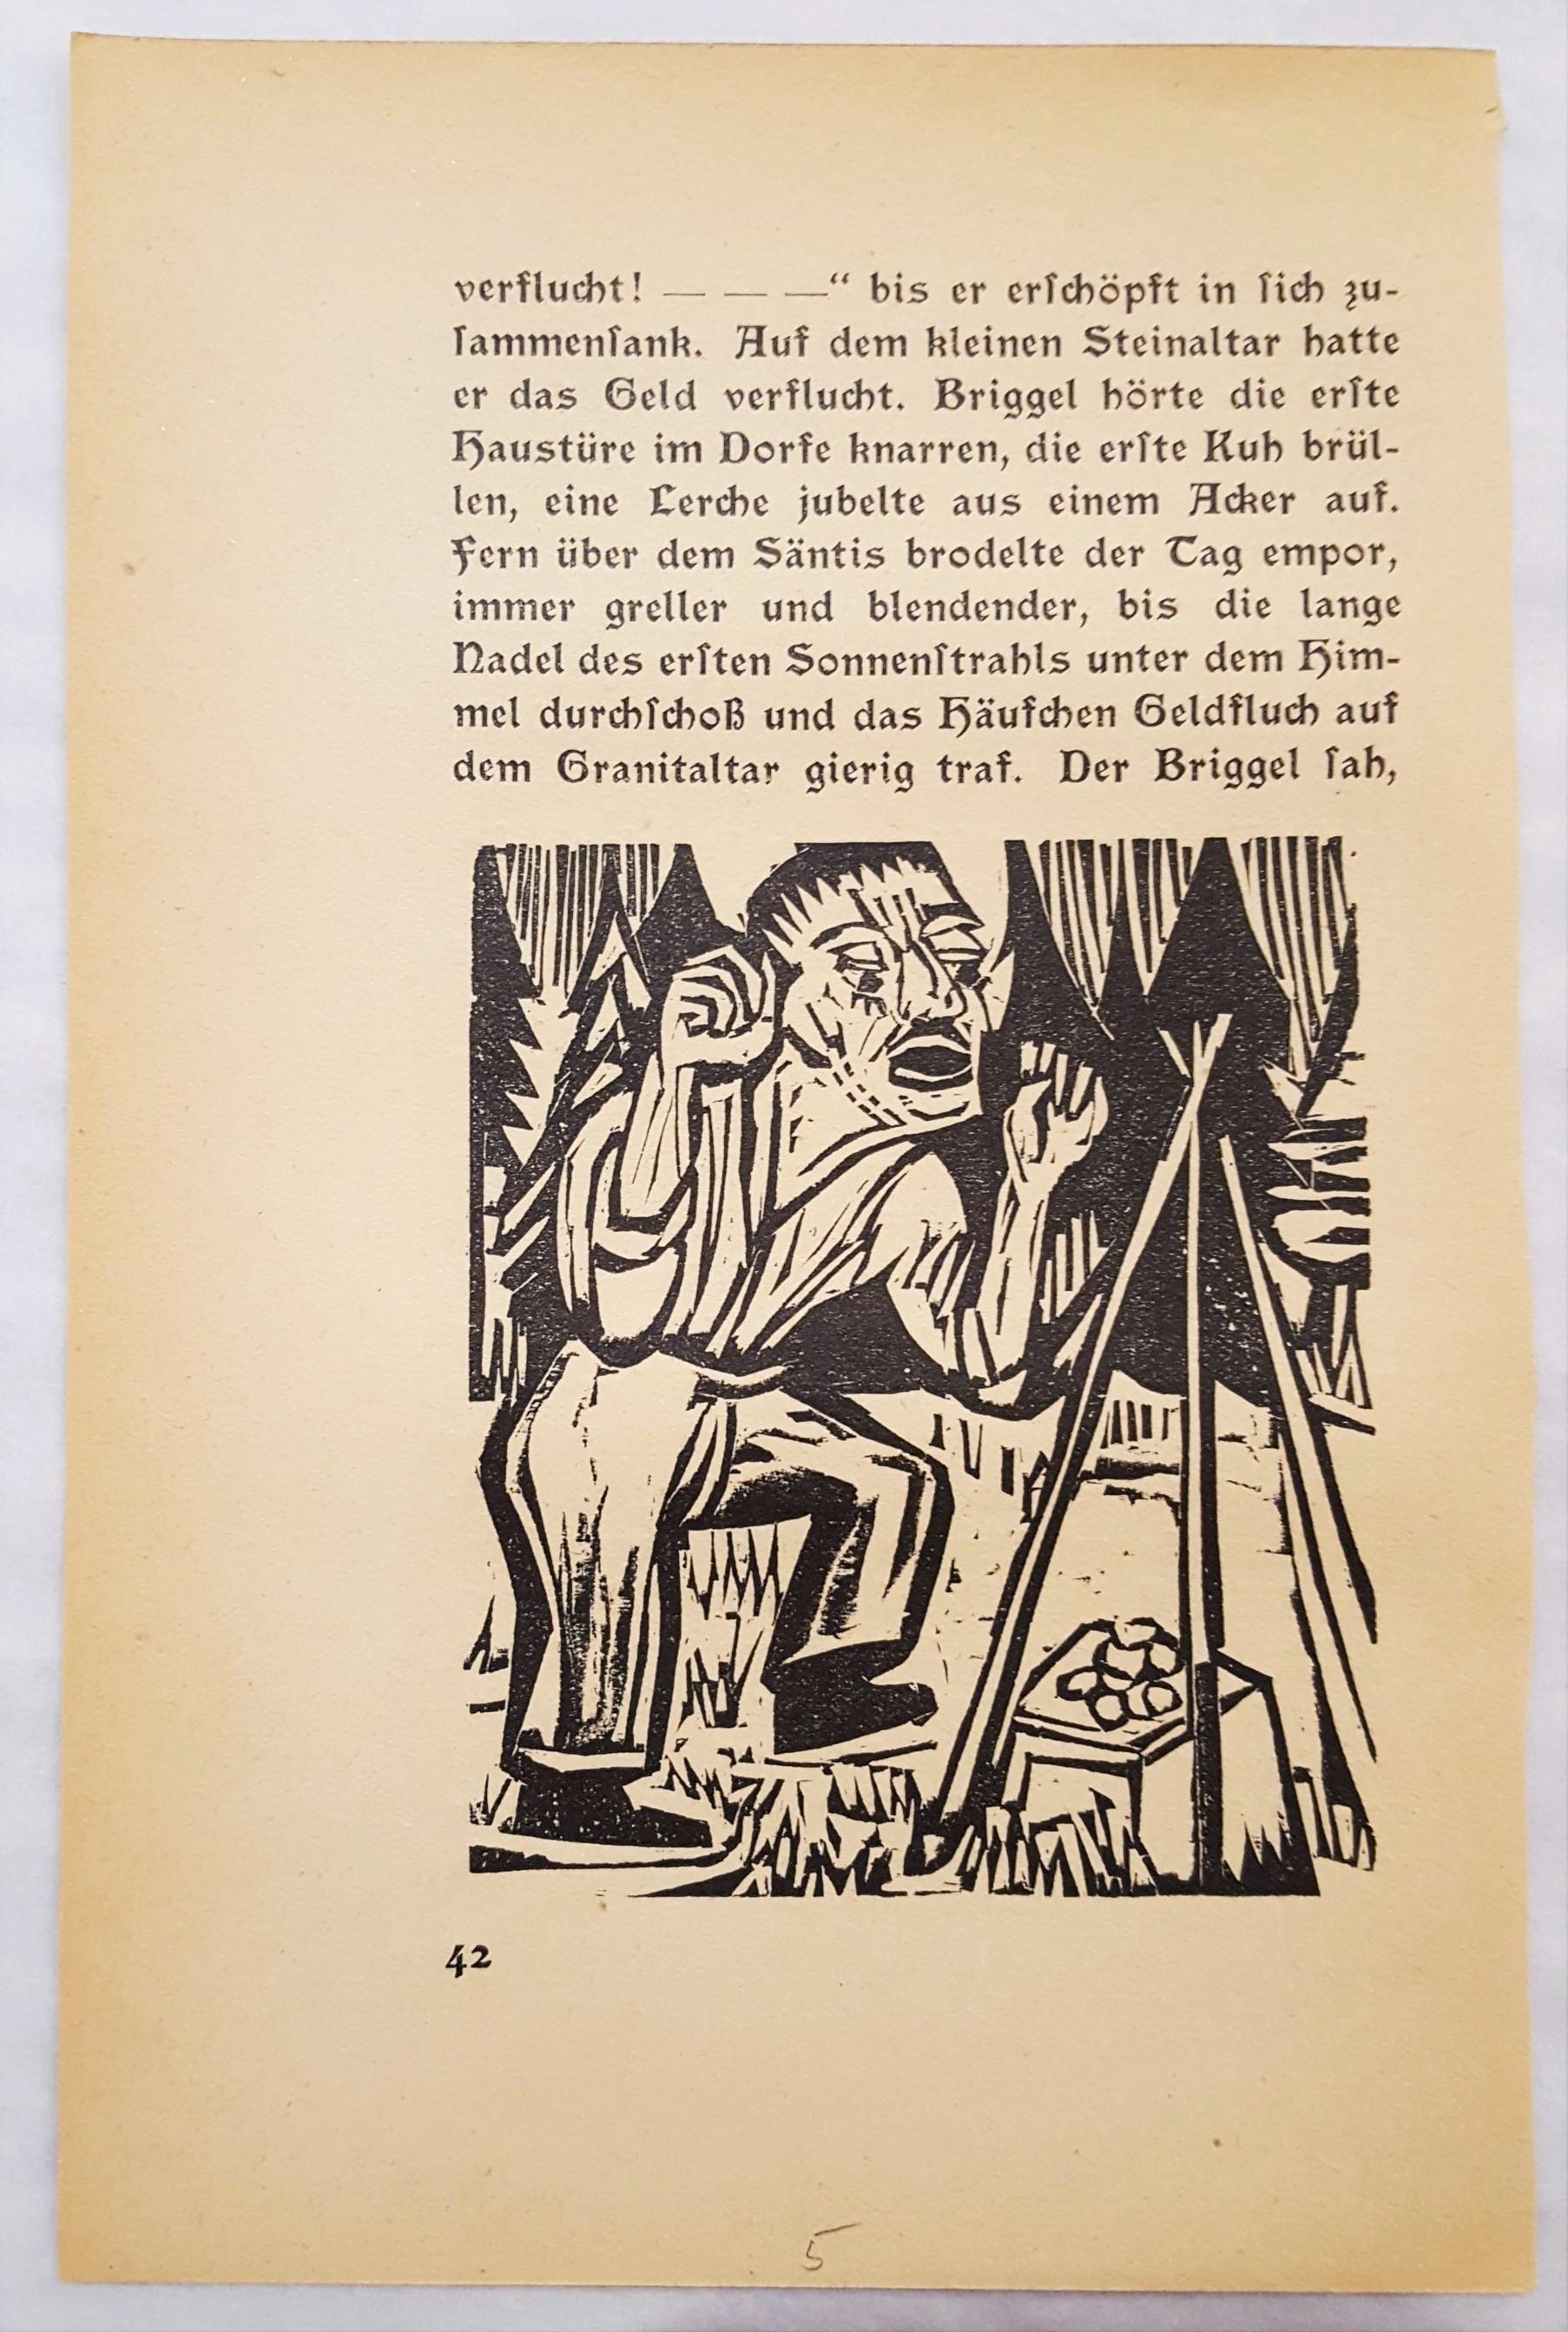 Der Briggel: Briggel verflucht das Geld (Briggel: Briggel Cursing Money) - Print by Ernst Ludwig Kirchner